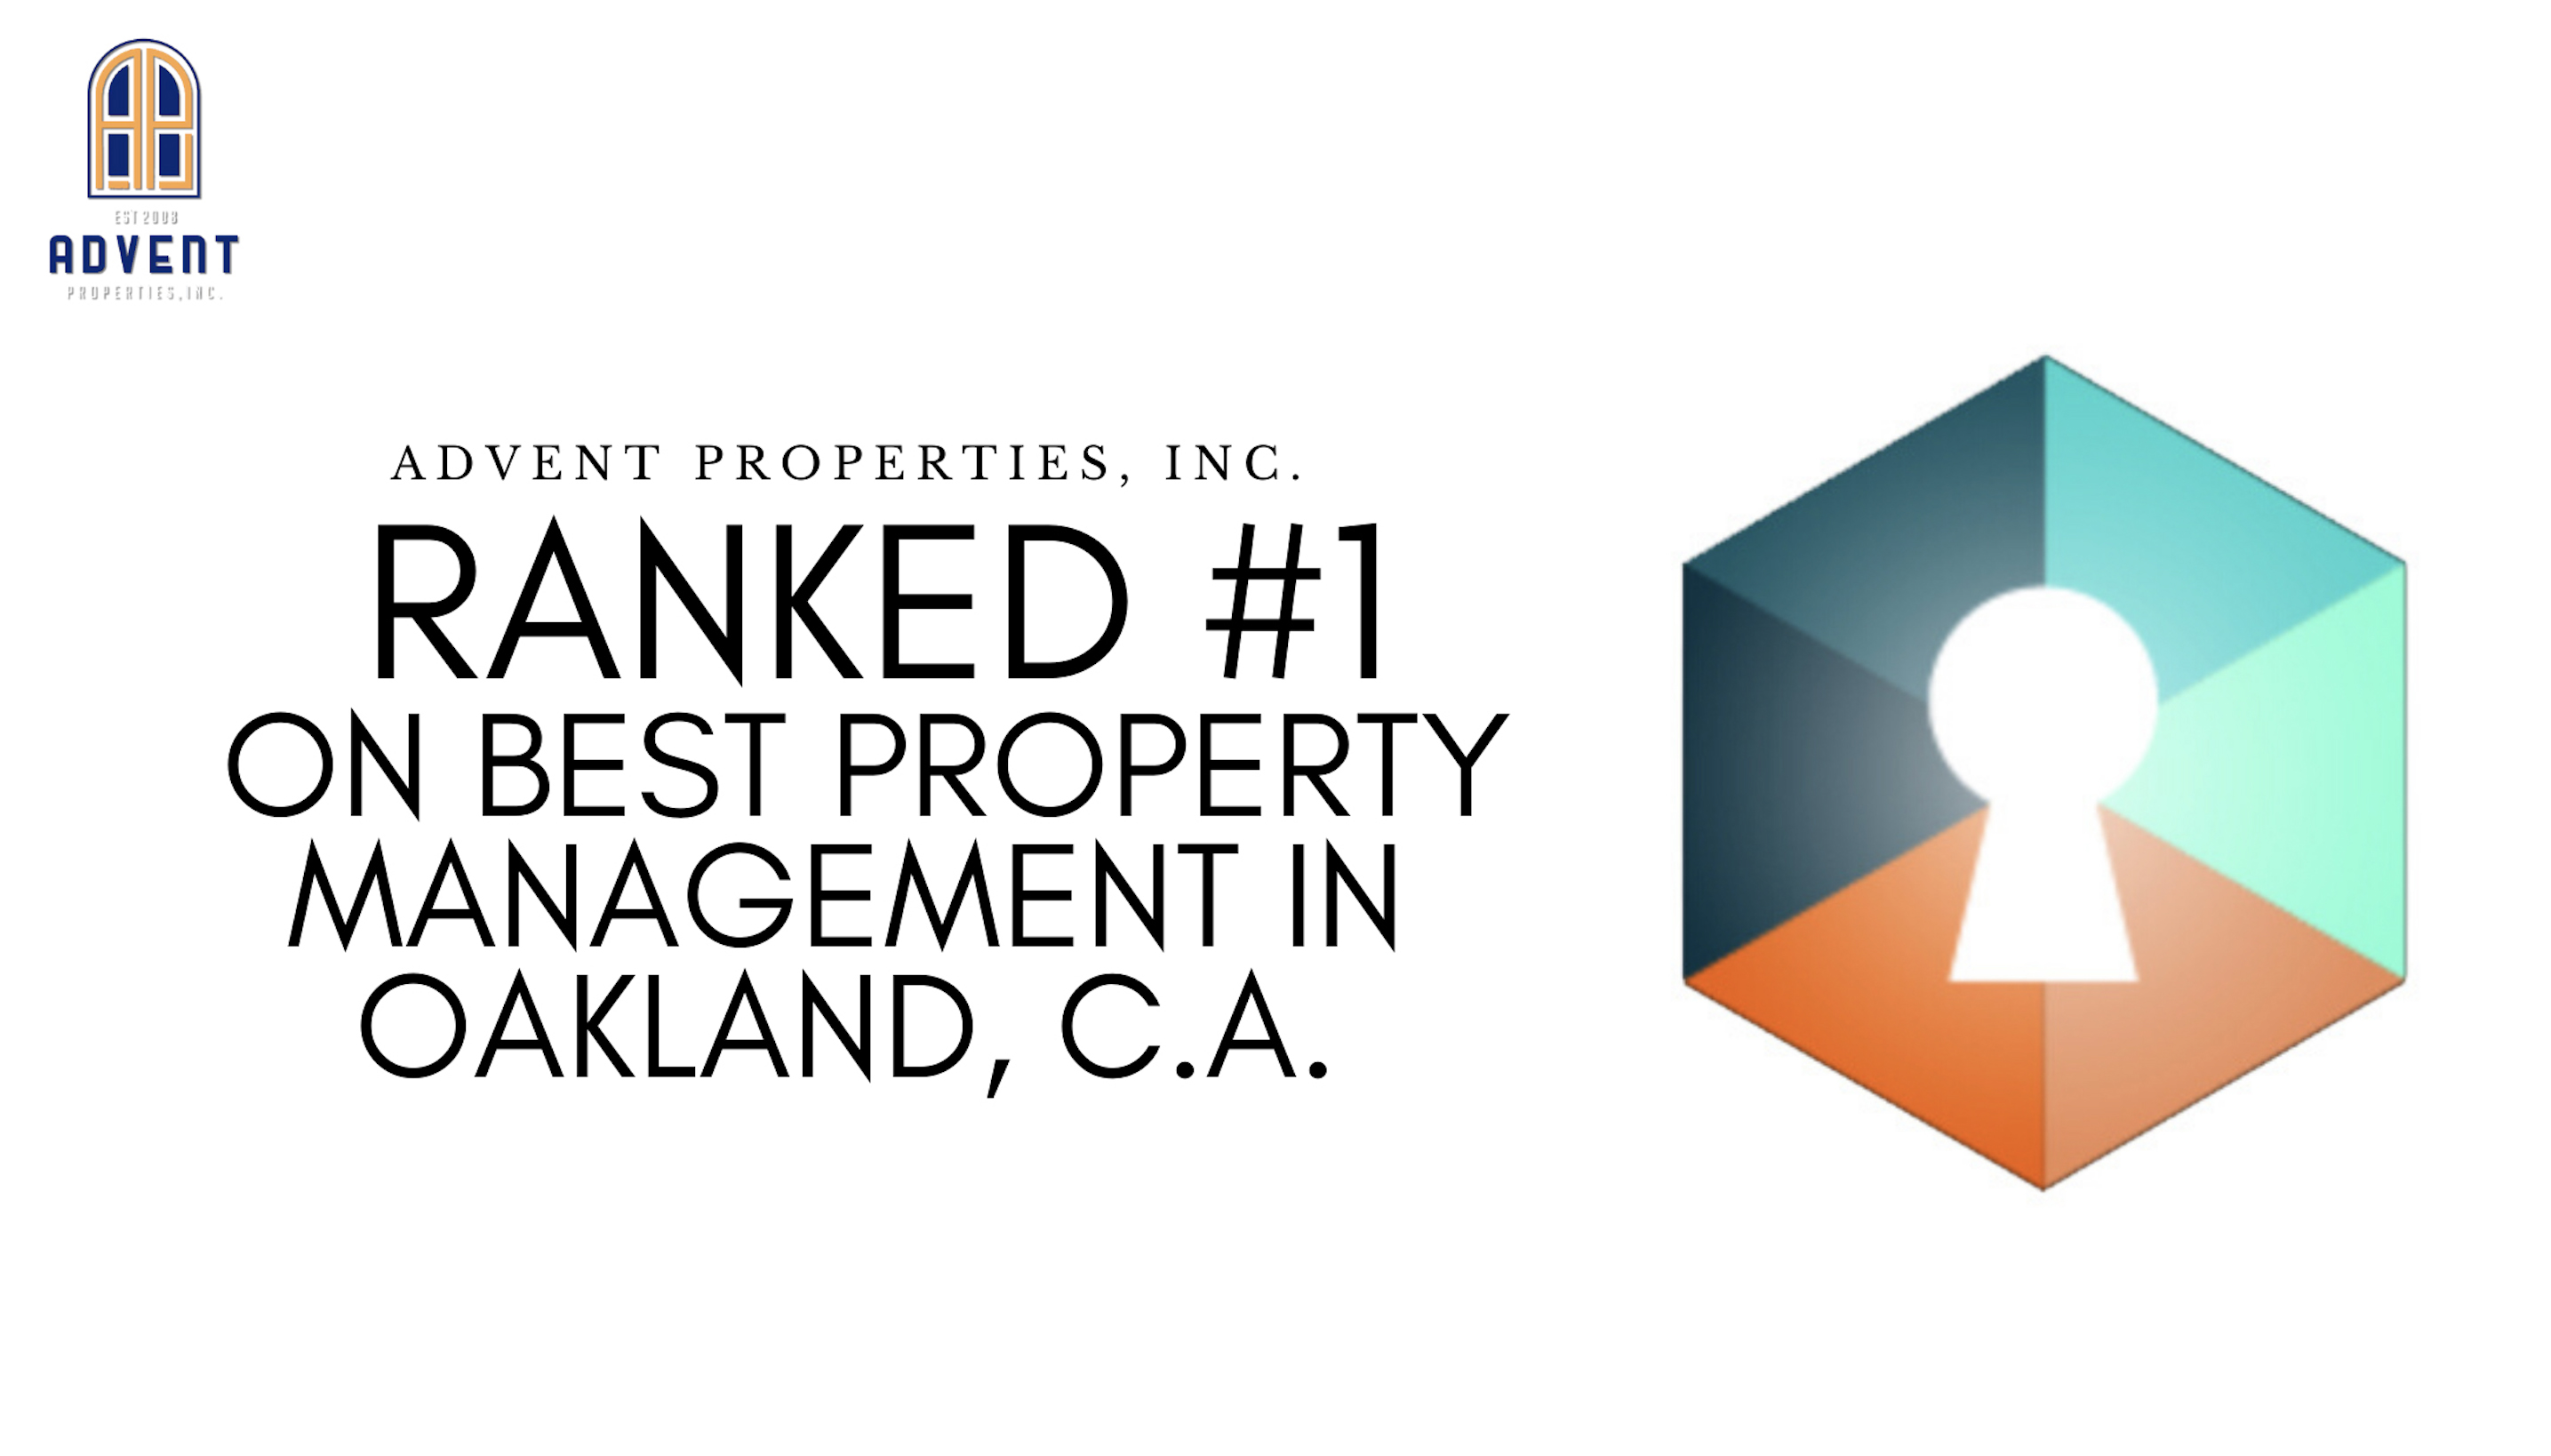 Propertymanagement.com's Best Property Management in Oakland